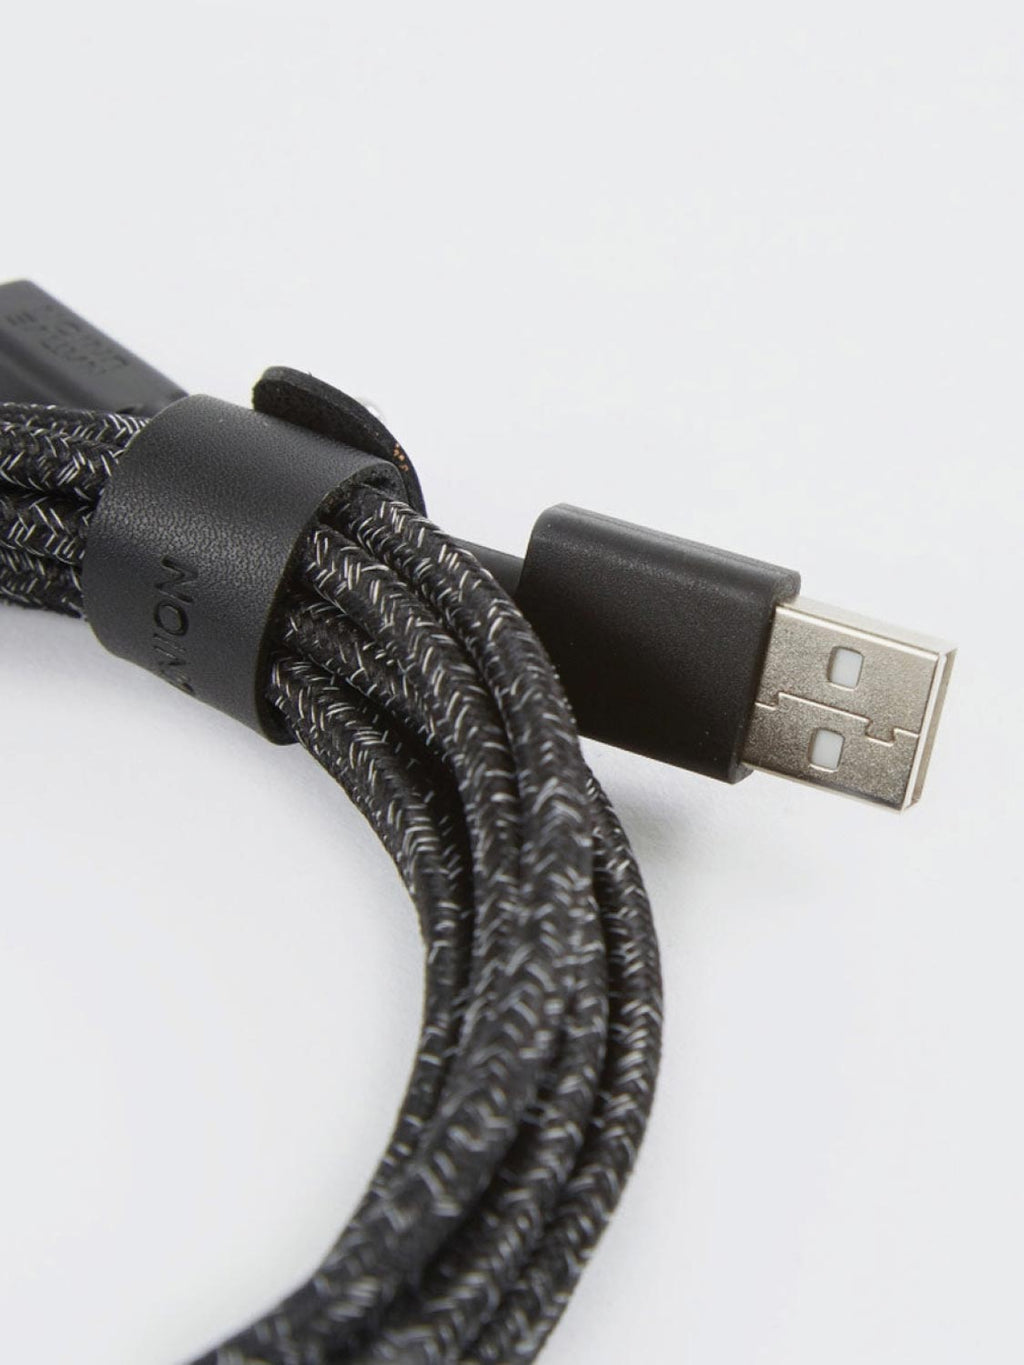 Cable Lightning a USB-C 3m Negro Native Union